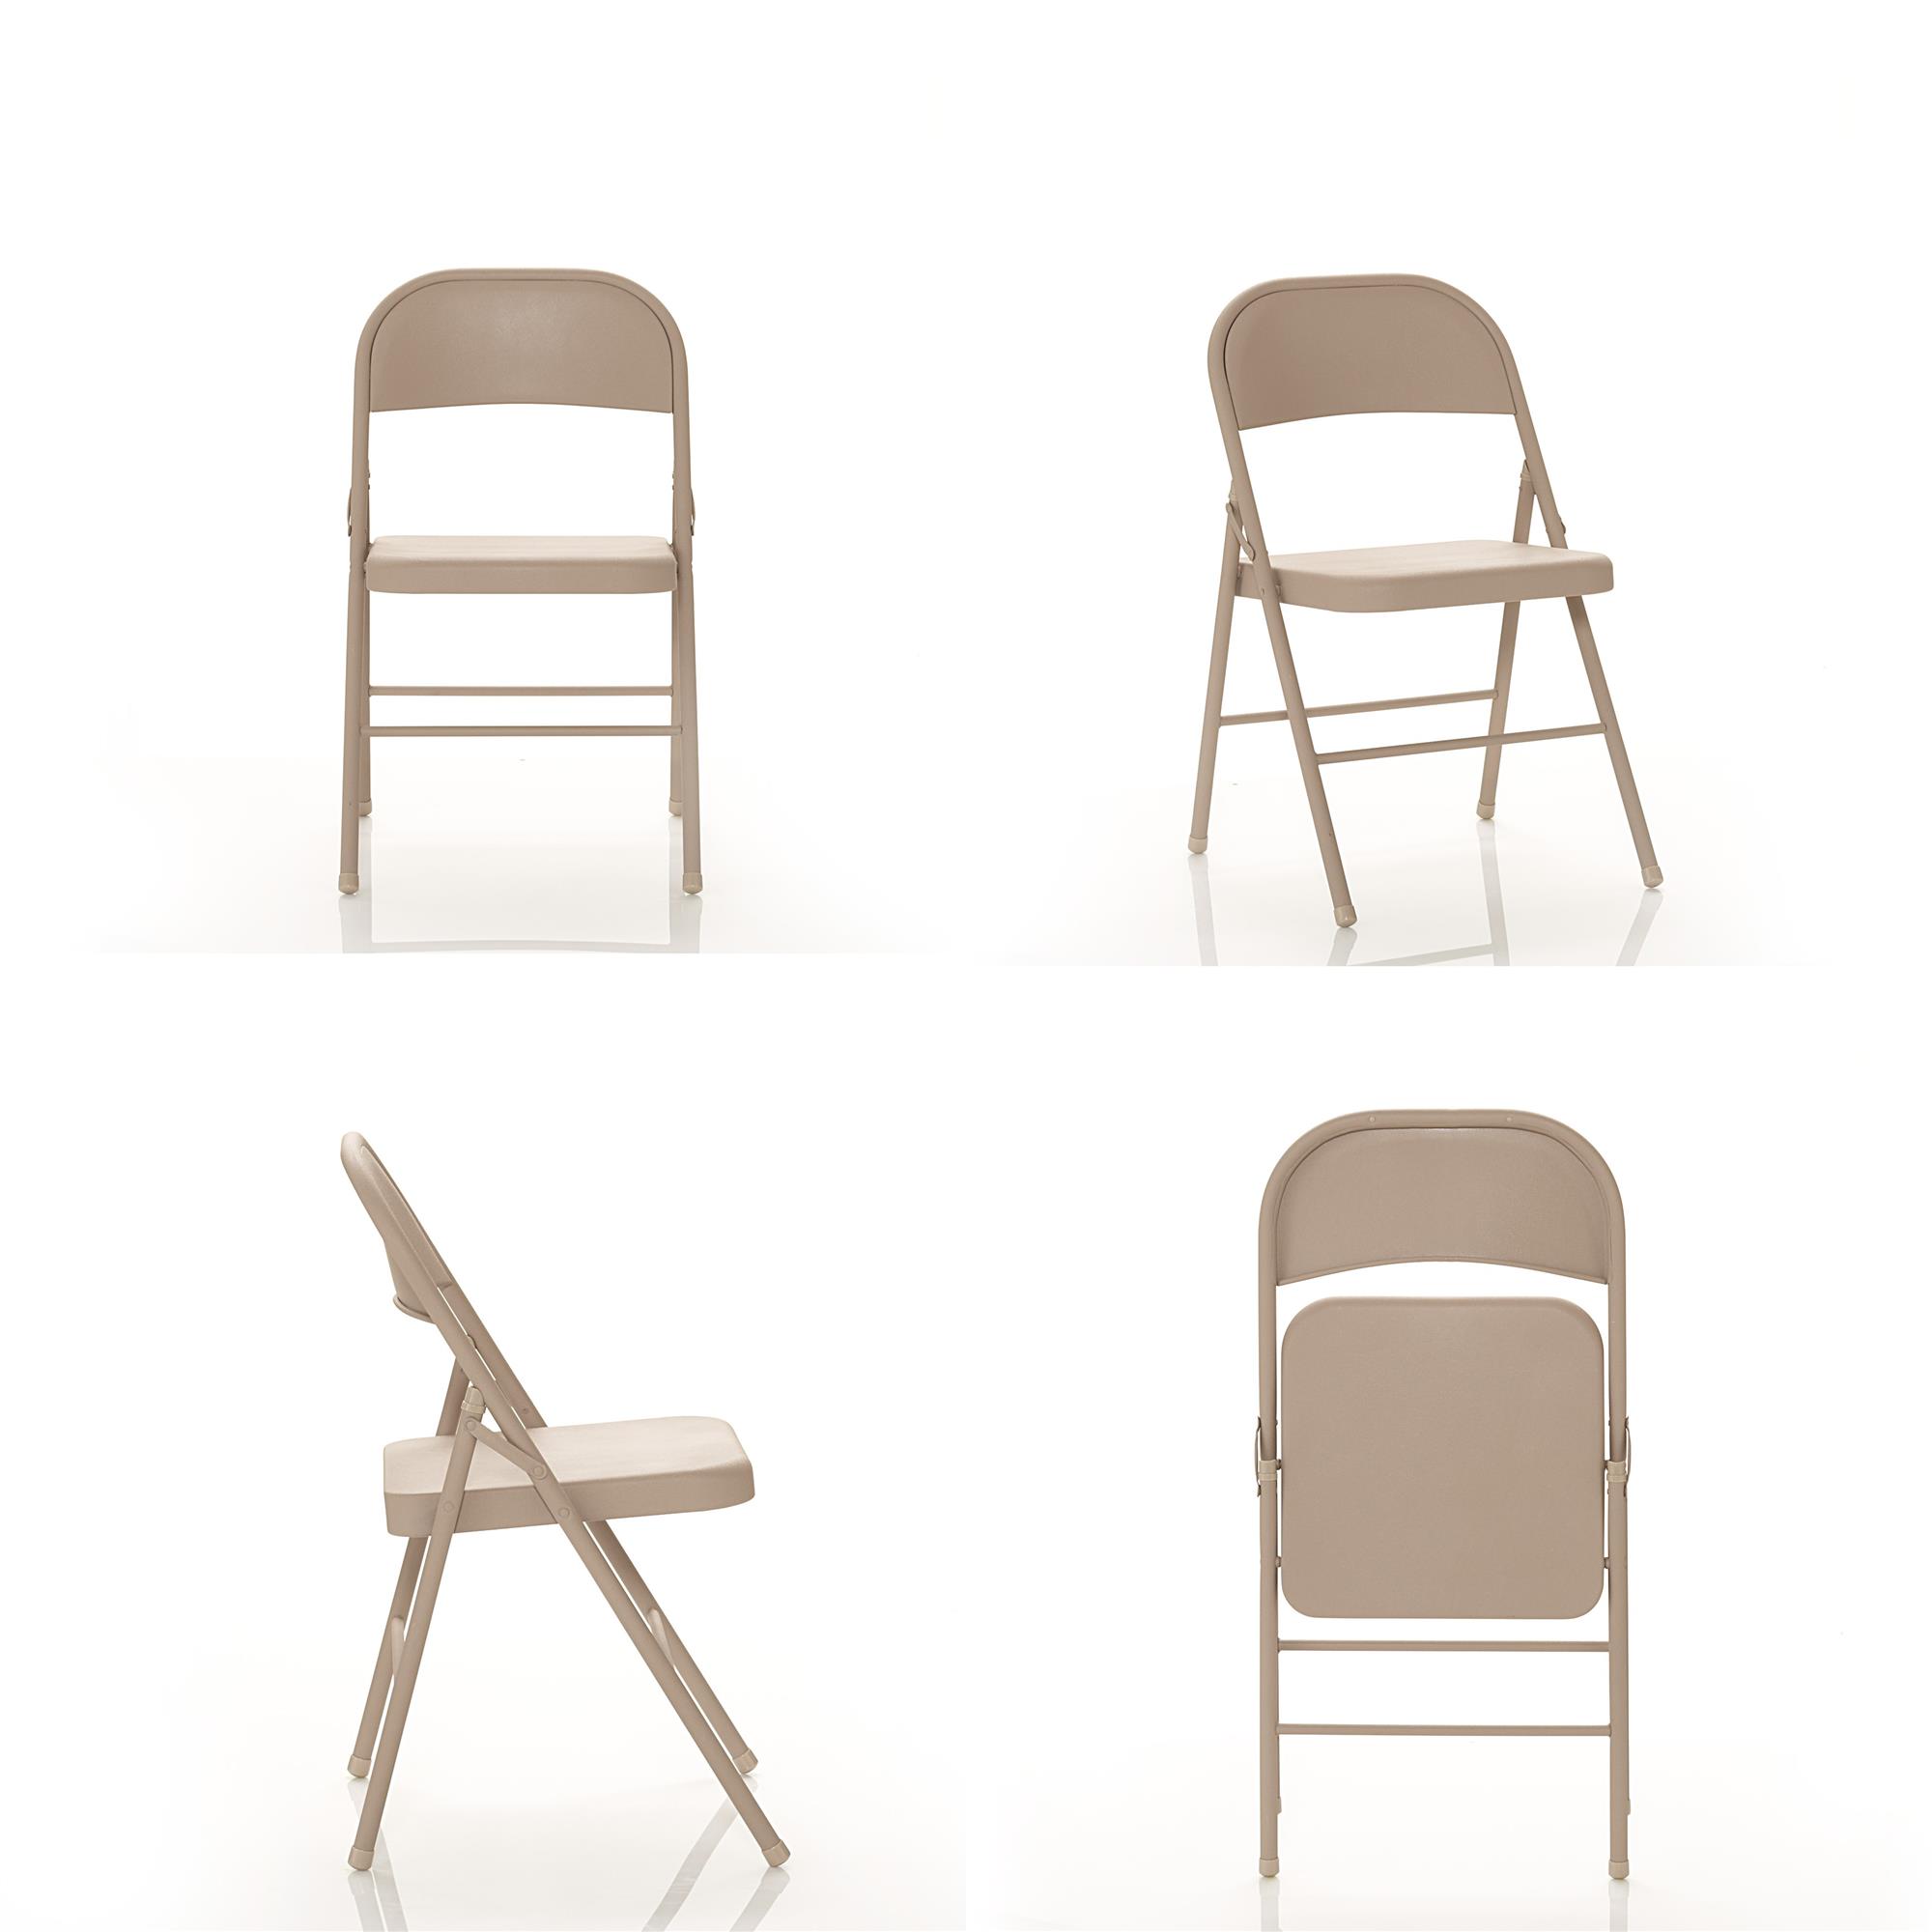 Mainstays Steel Folding Chair (4 Pack), Beige - image 3 of 10